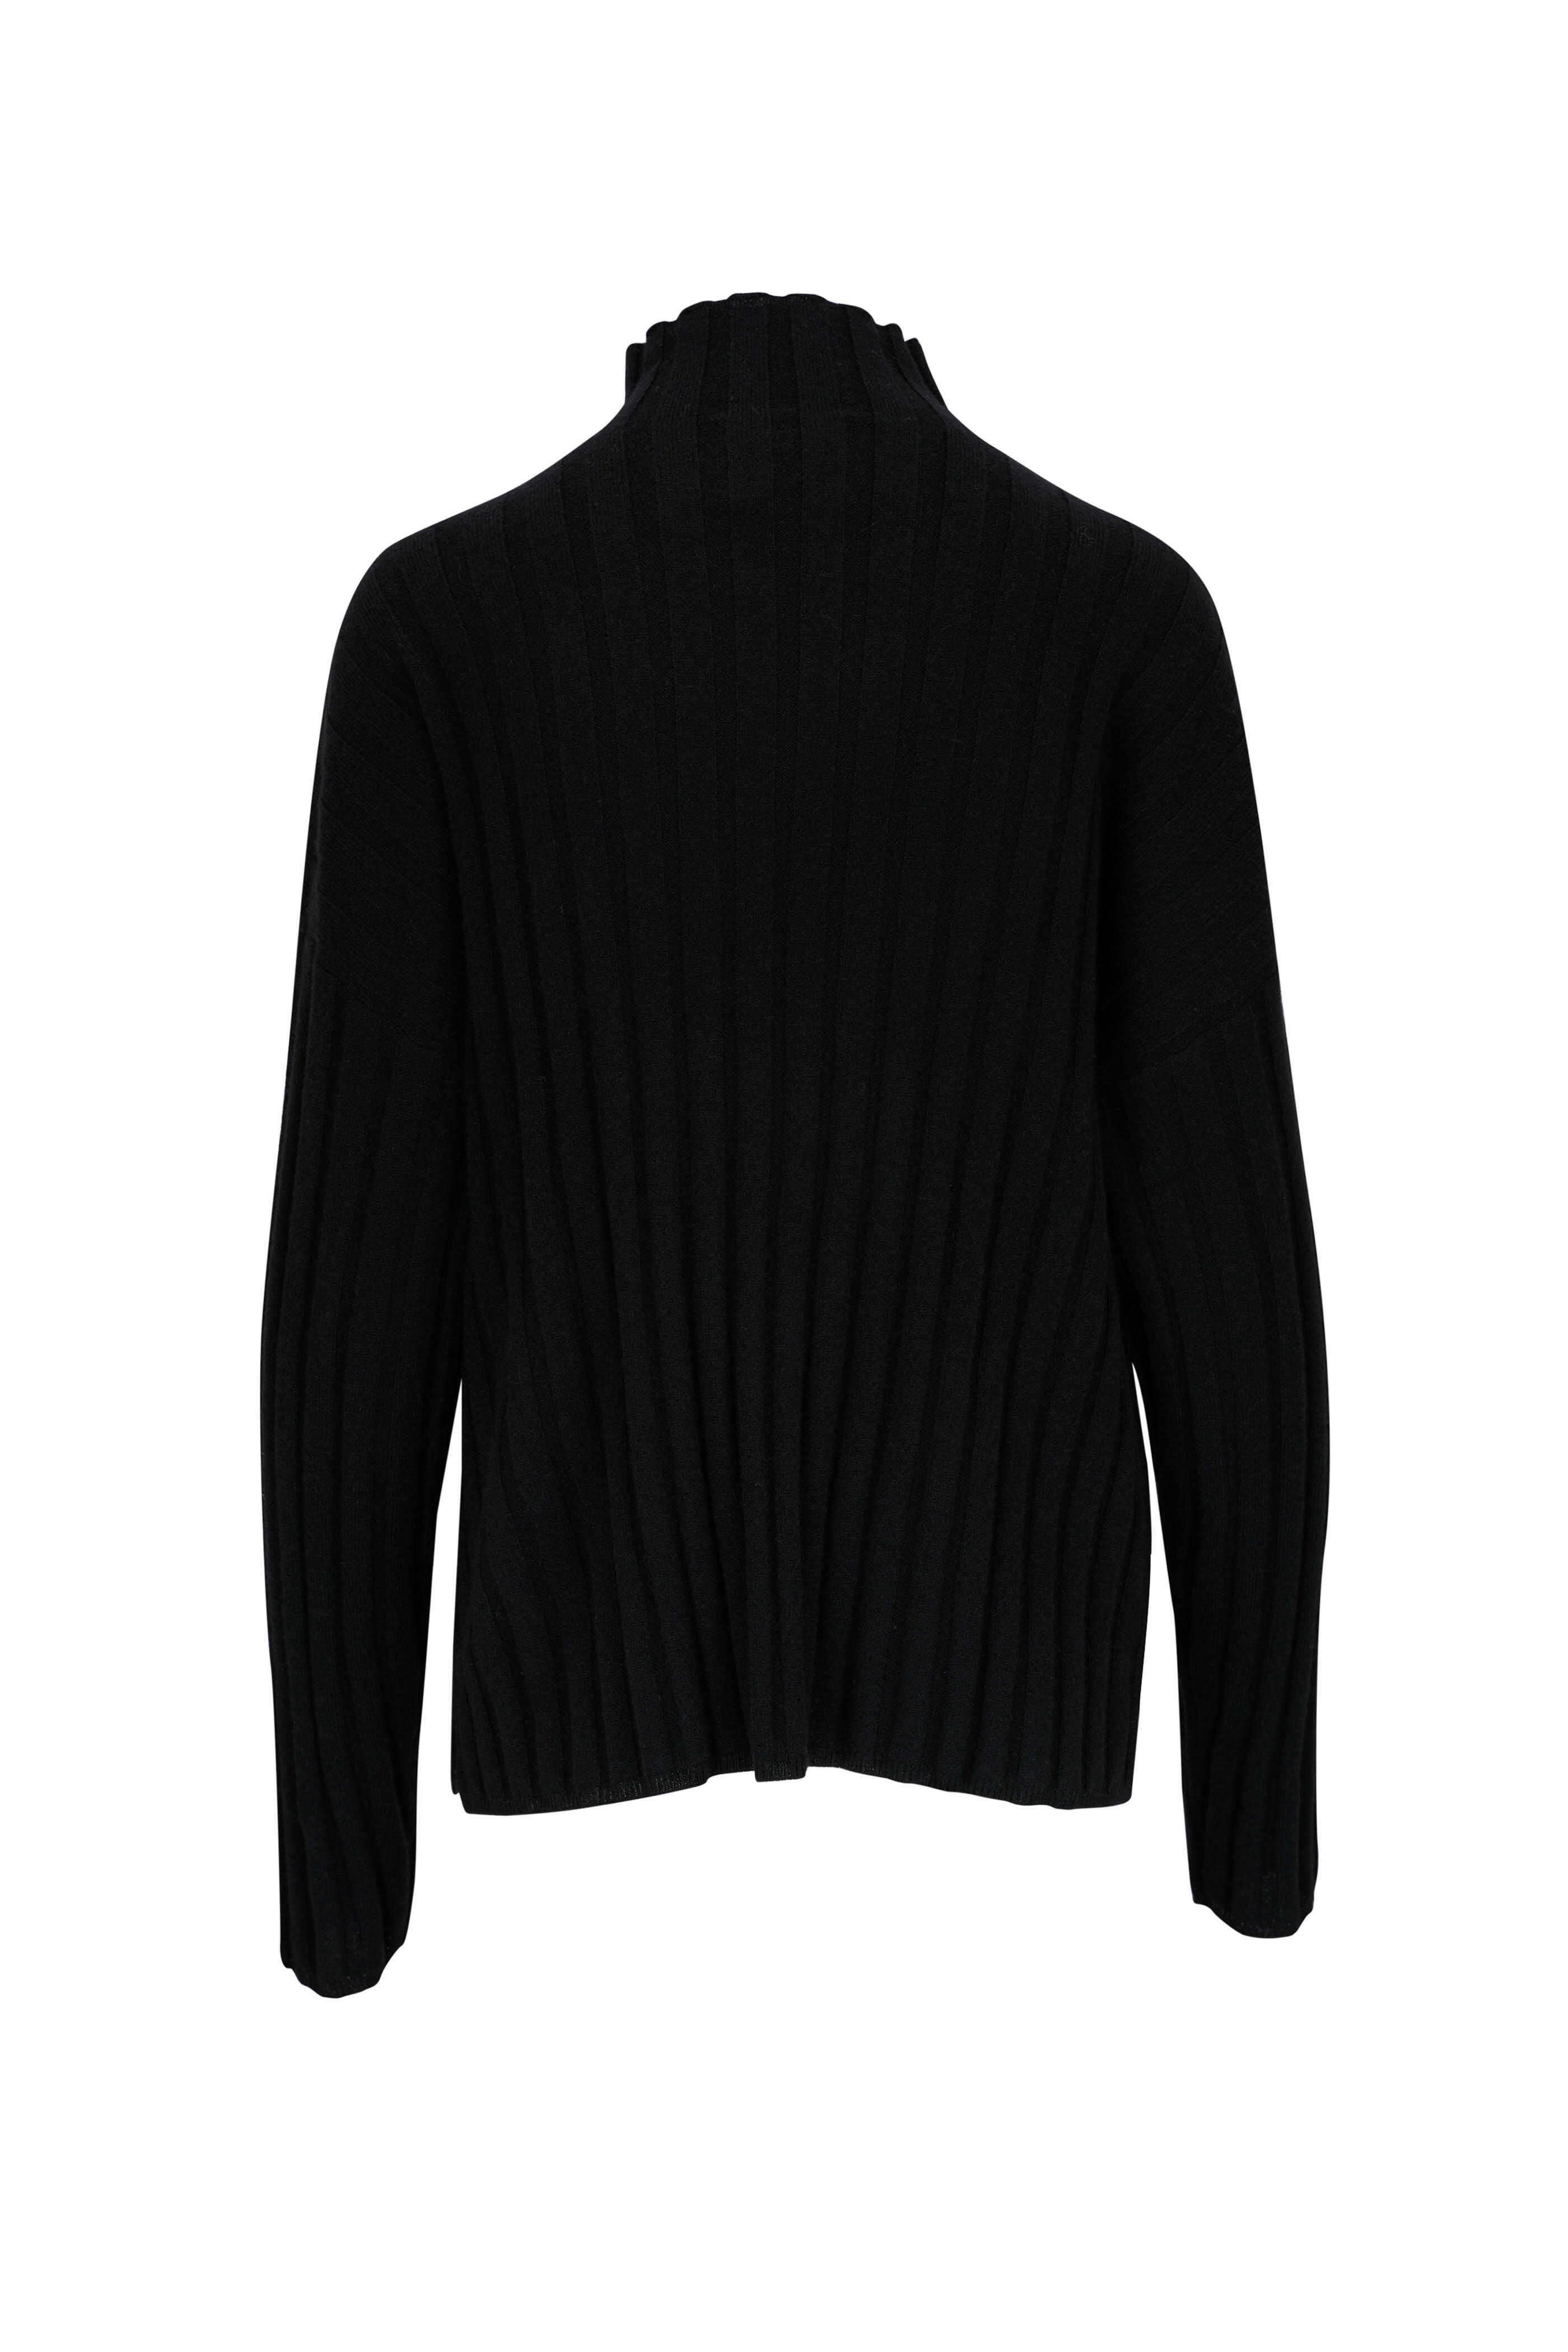 Lisa Yang - Inga Black Mock Neck Cashmere Sweater